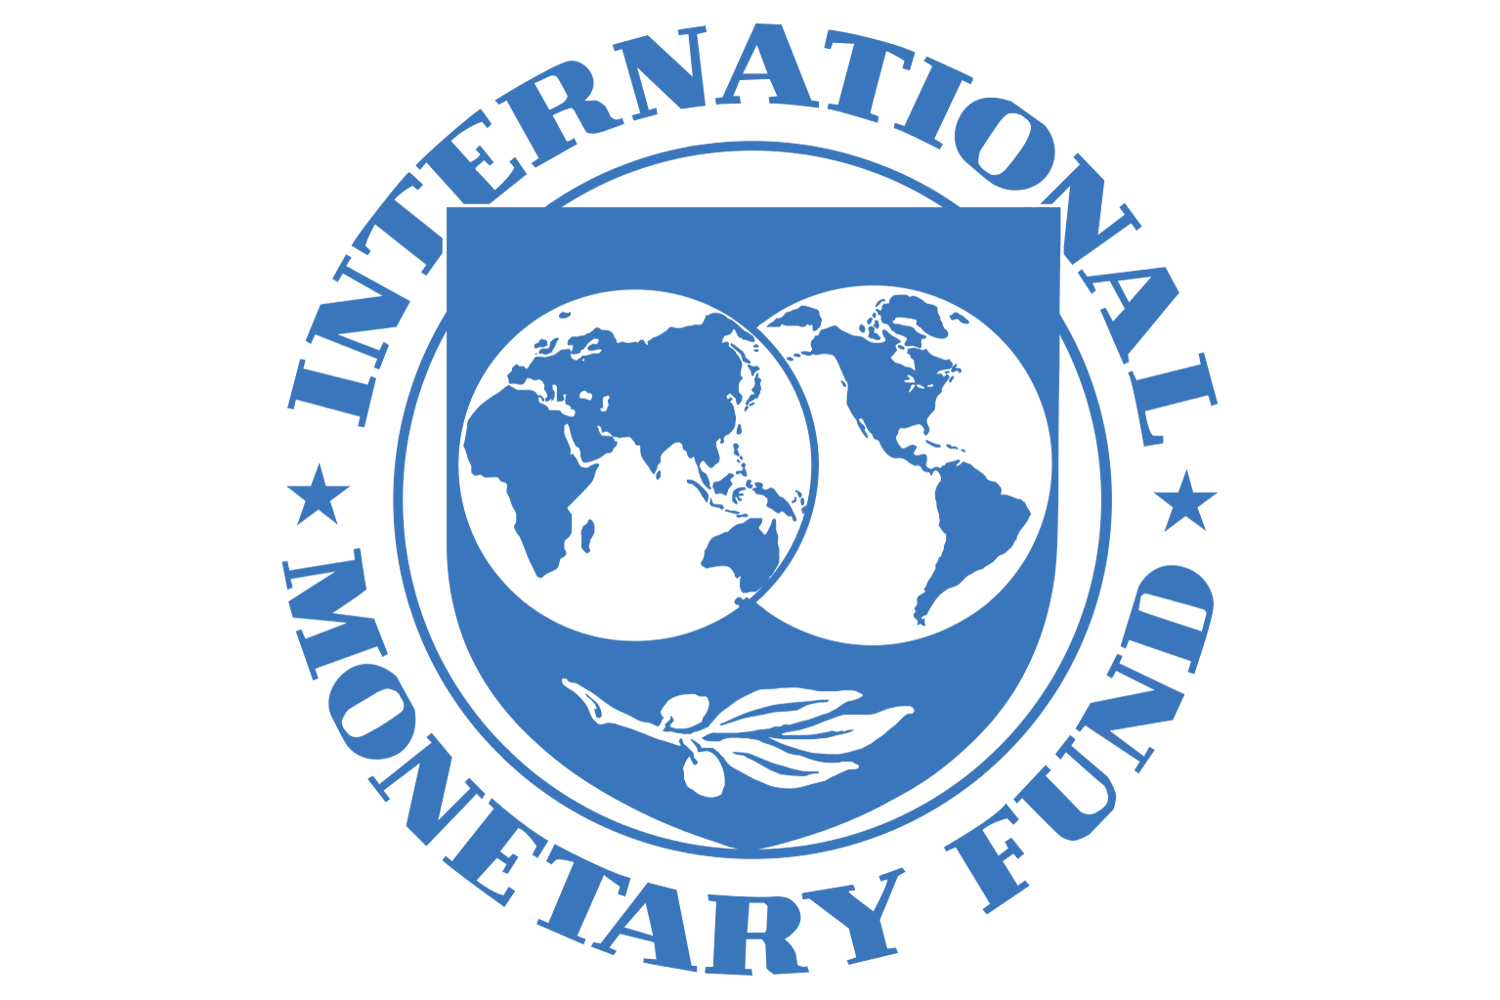 Internationaler Währungsfonds - IWF